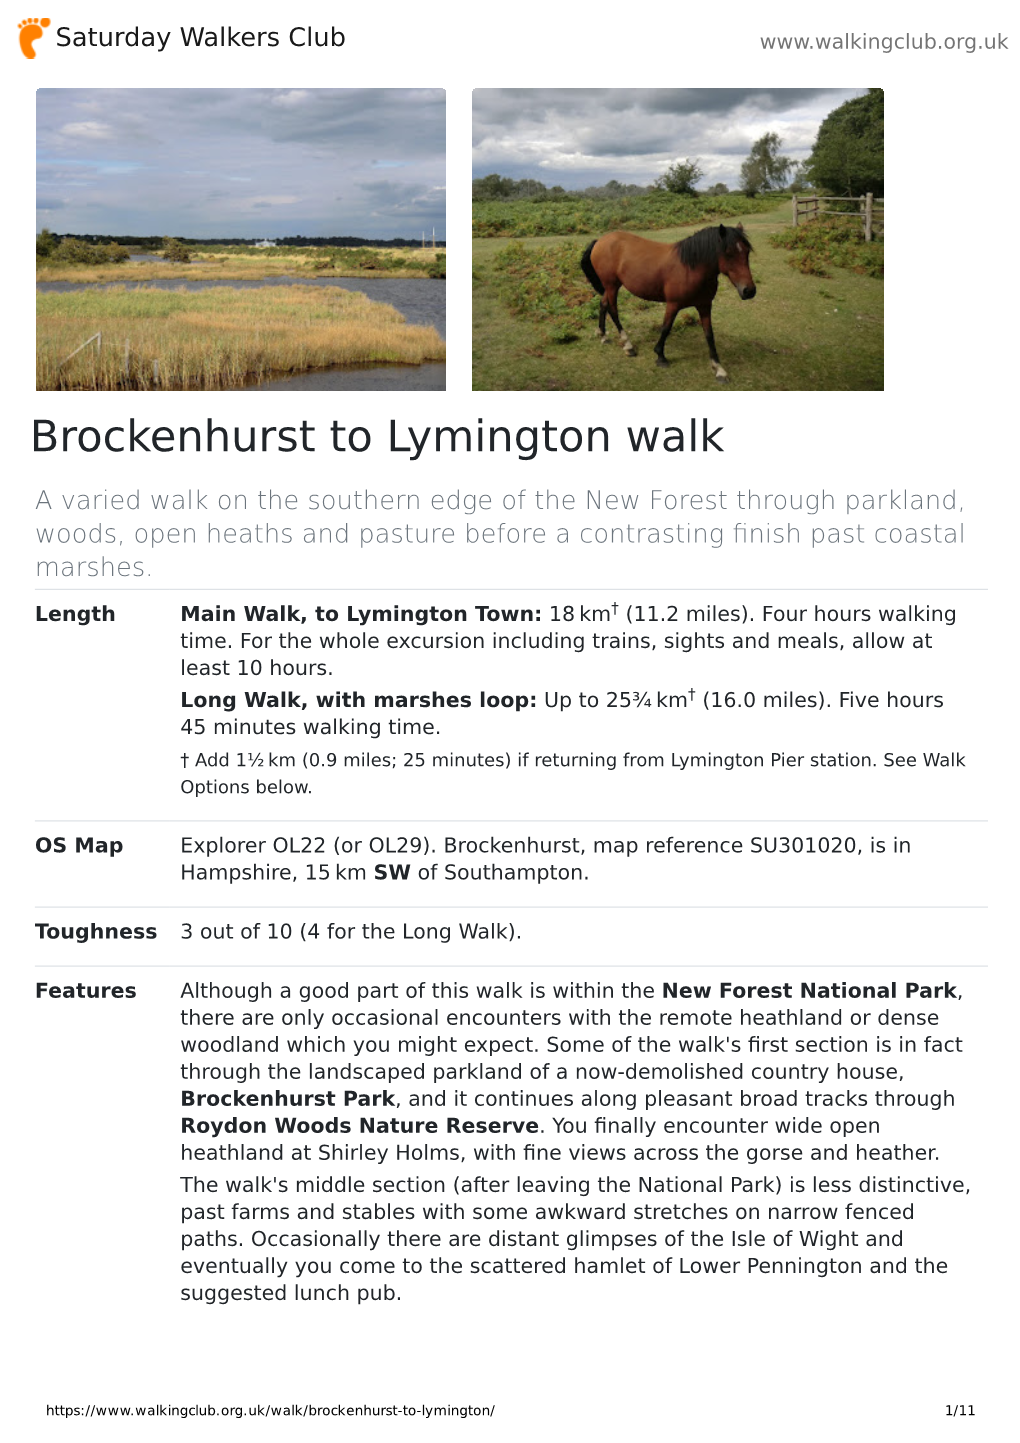 Brockenhurst to Lymington Walk